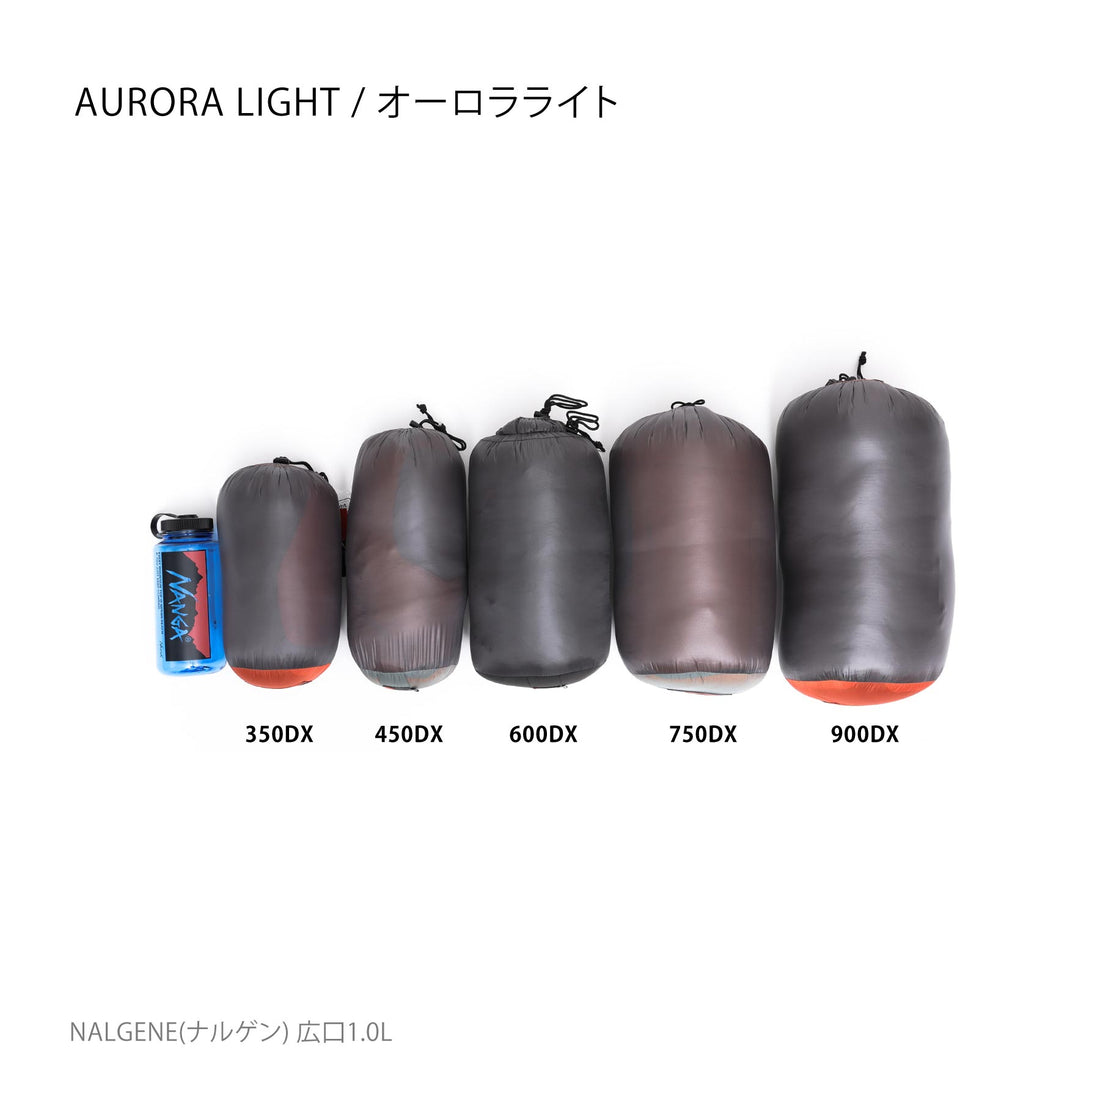 AURORA light 900 DX / オーロラライト900DX